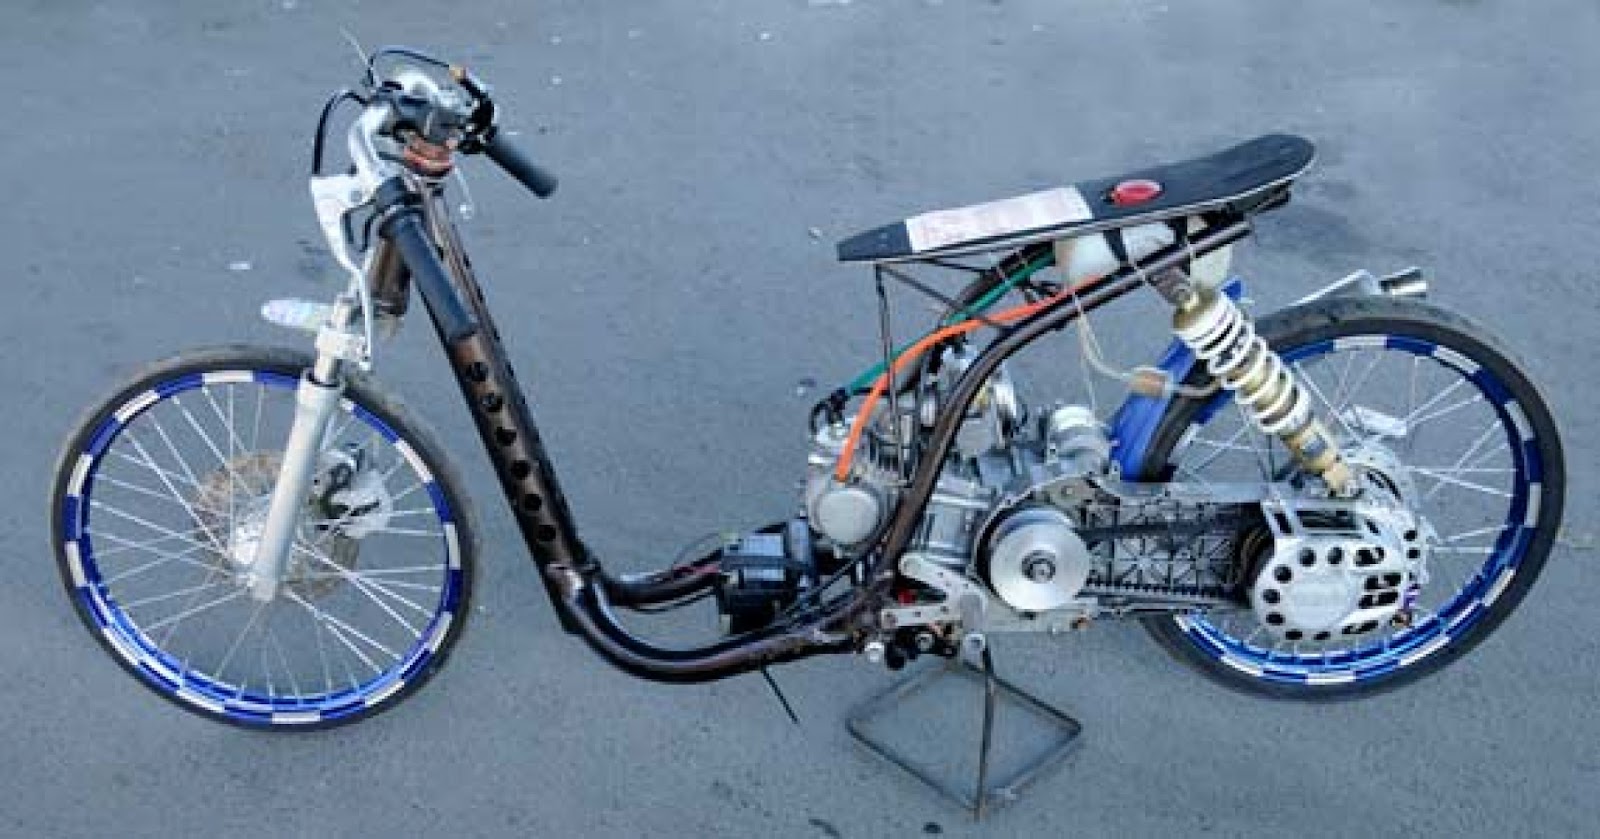 Kumpulan Gambar Sketsa Motor Drag Bike Terbaru Dinding Motor